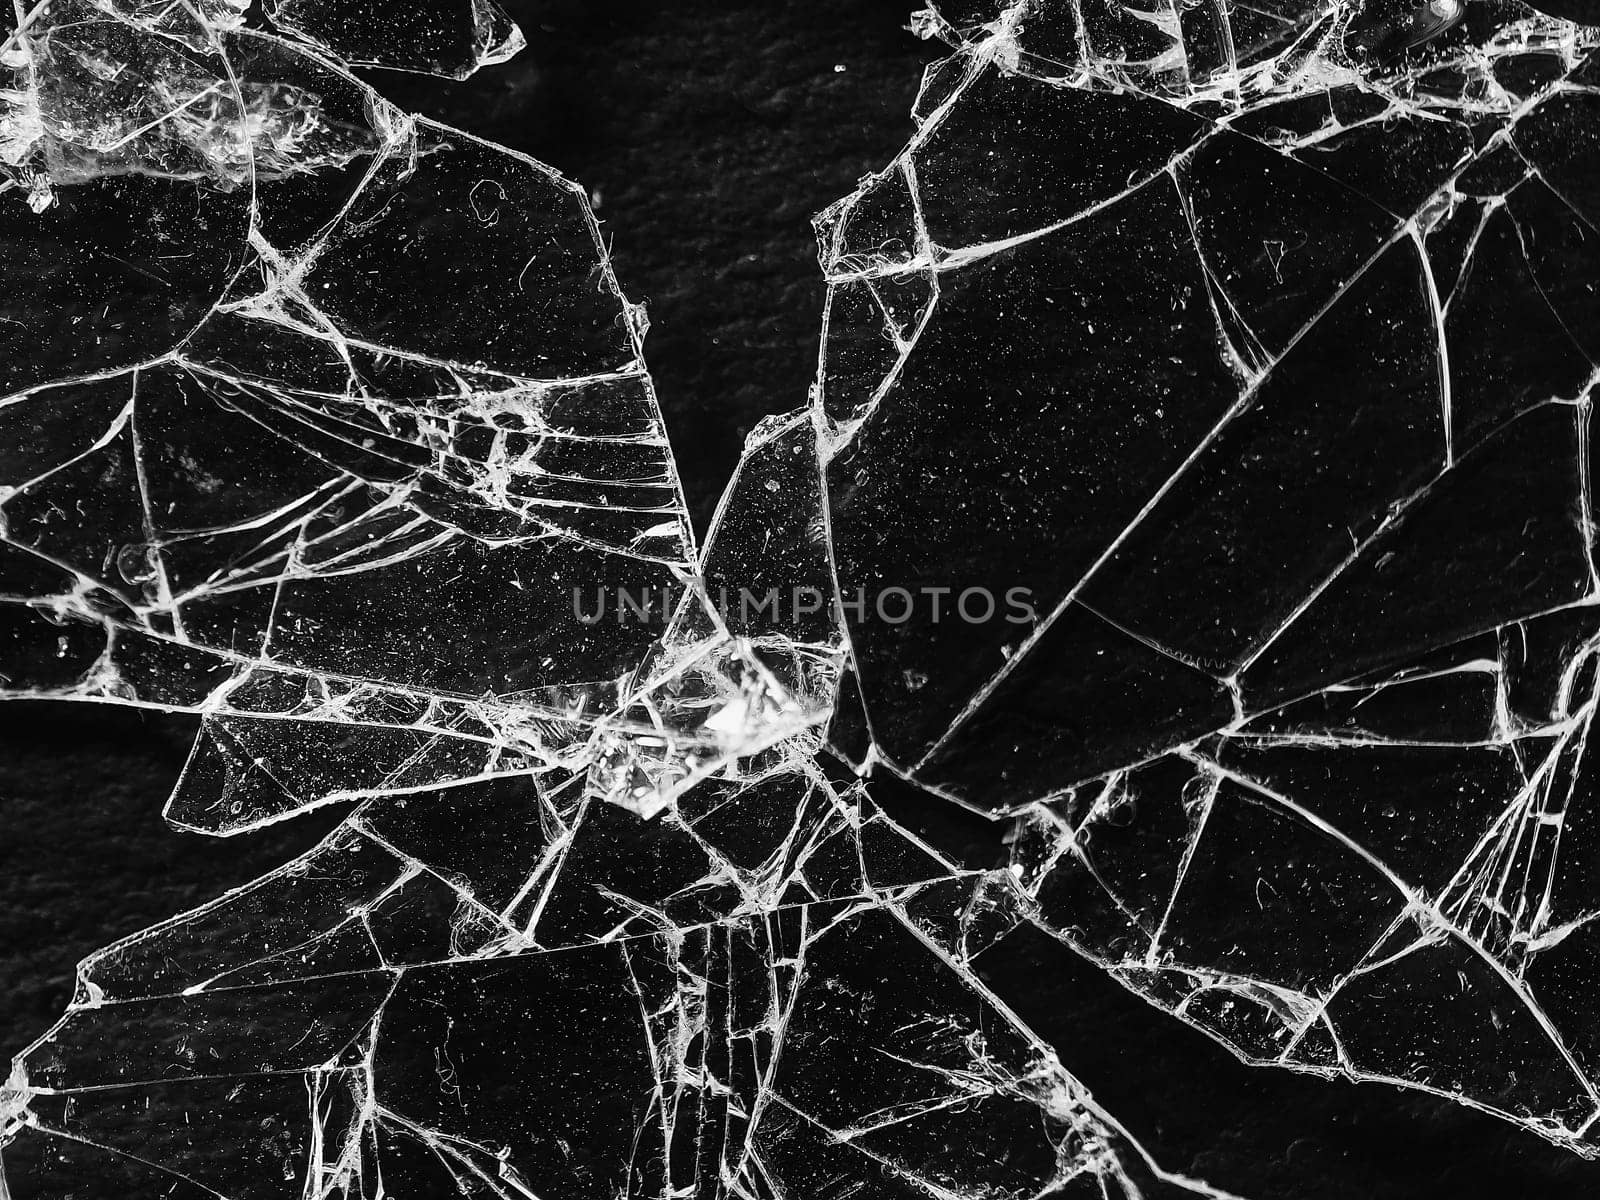 broken glass on a dark background by Alexander_V